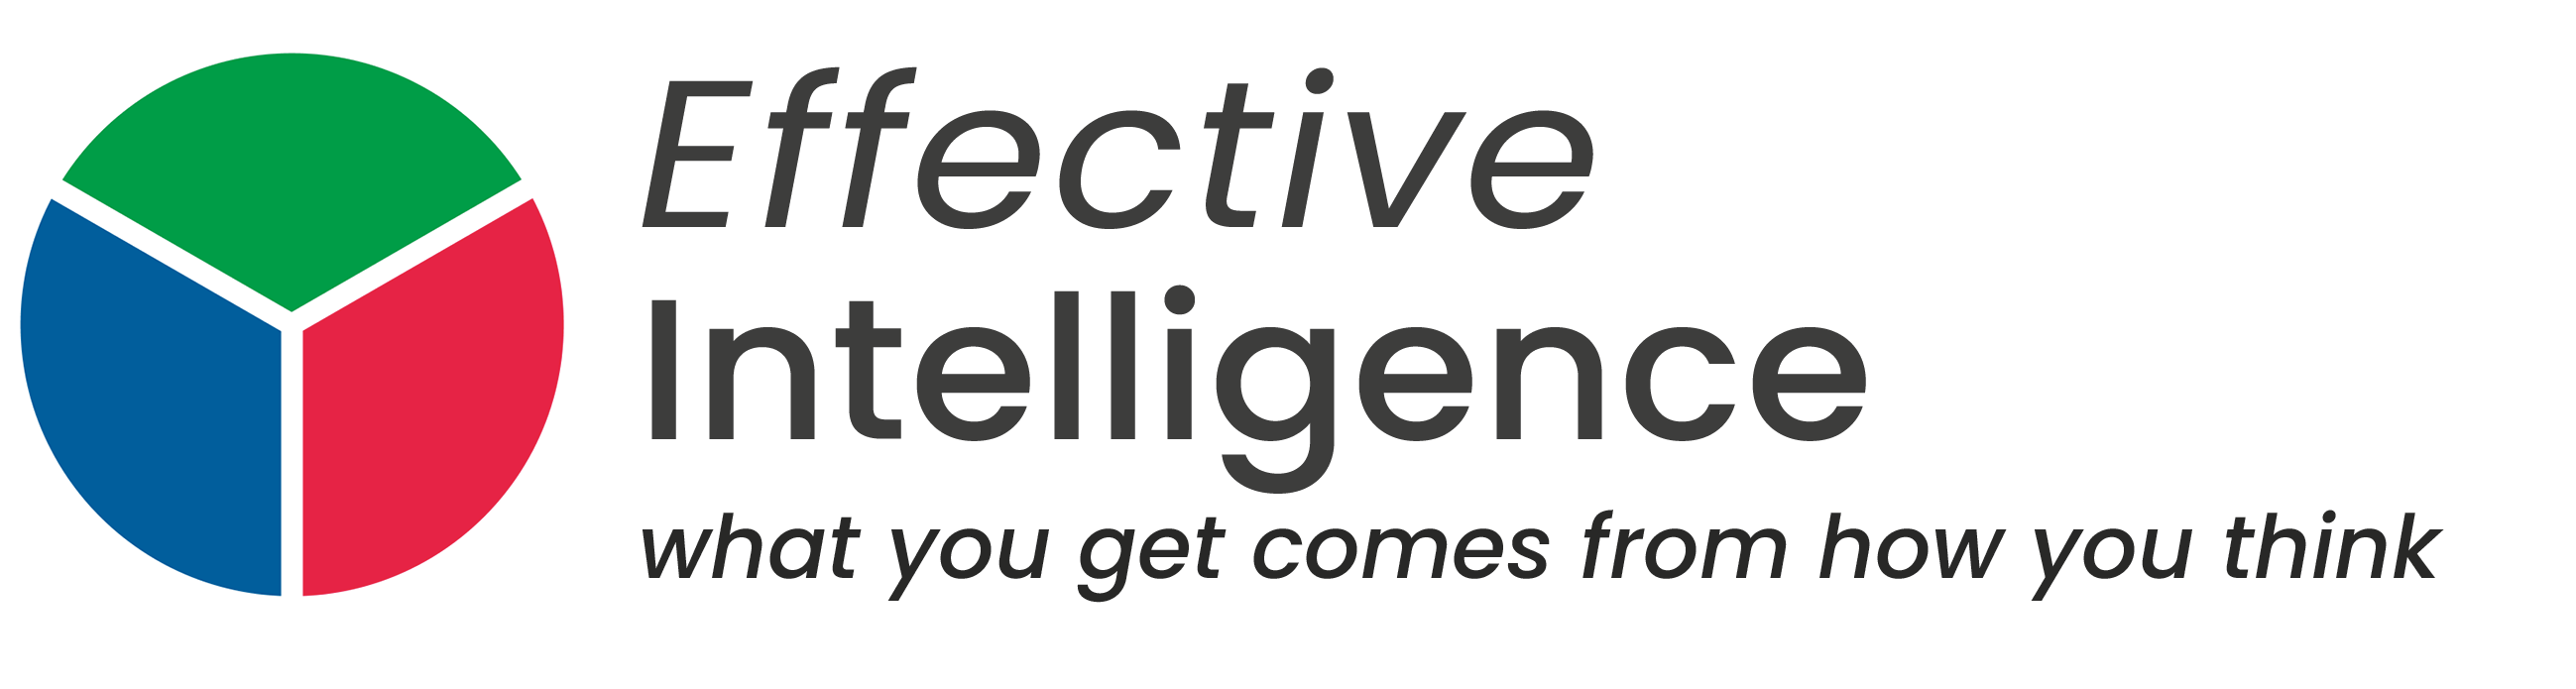 effective-intelegence-logo